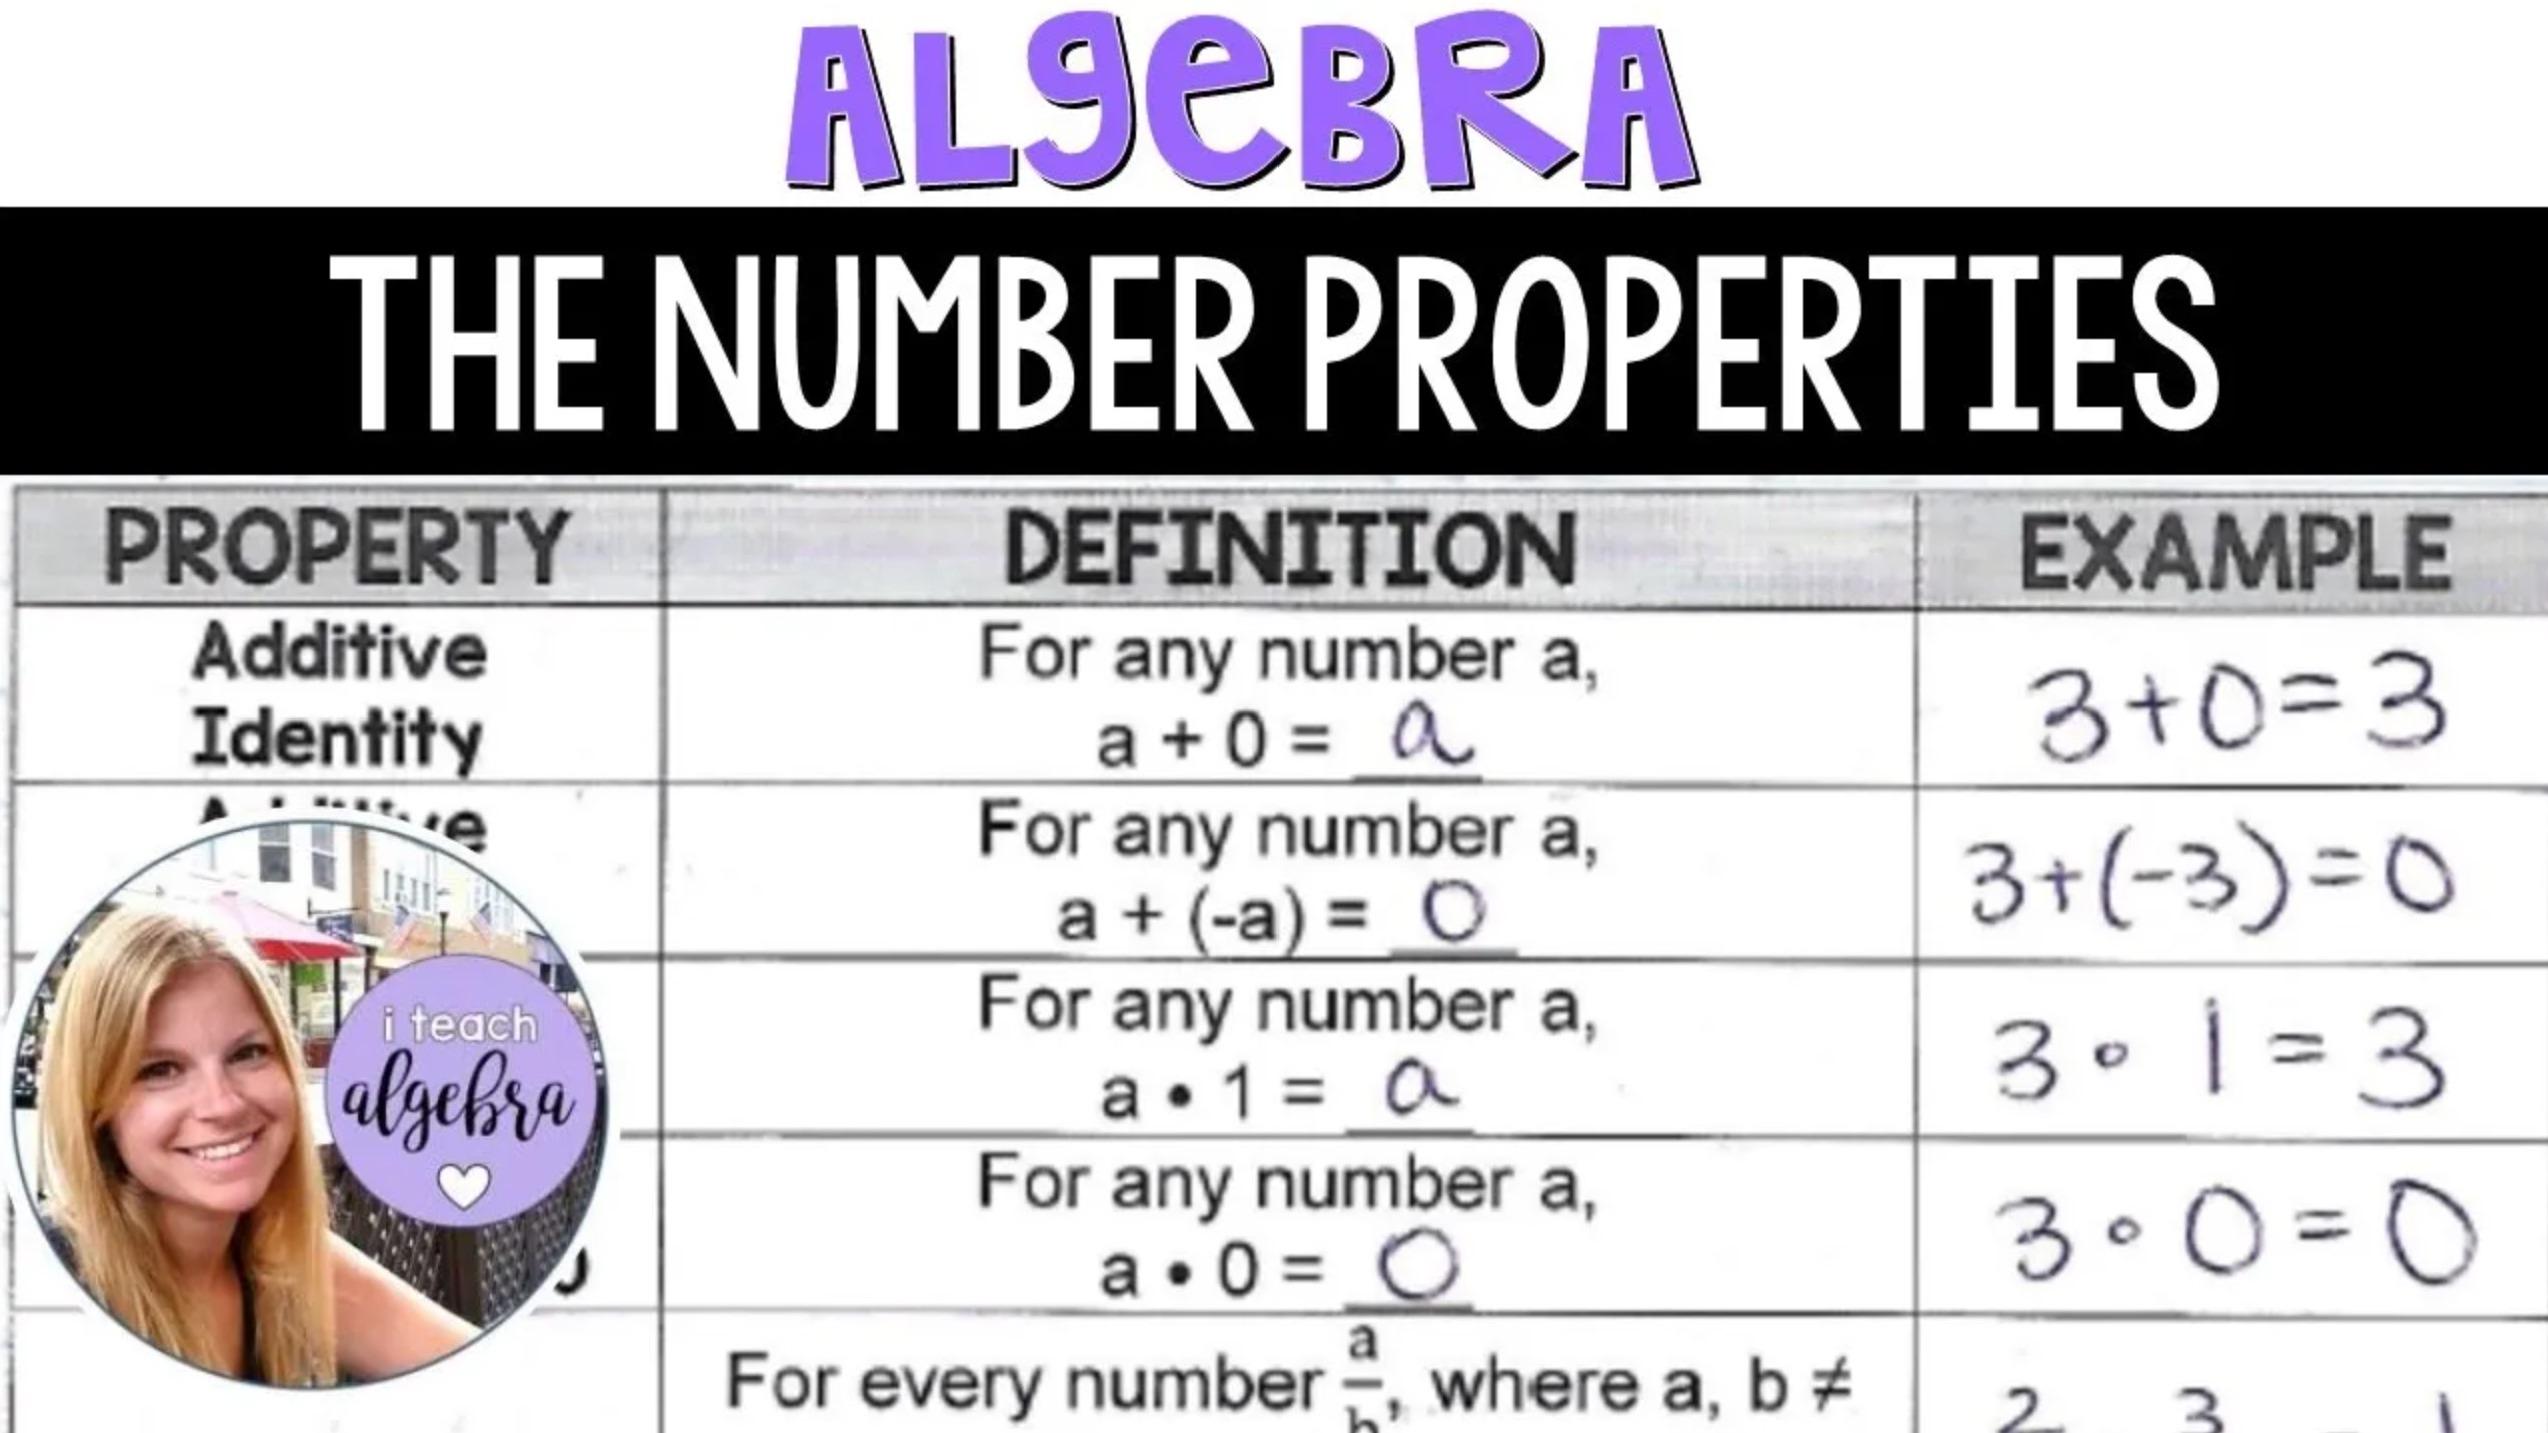 Algebra 1 - The Number Properties